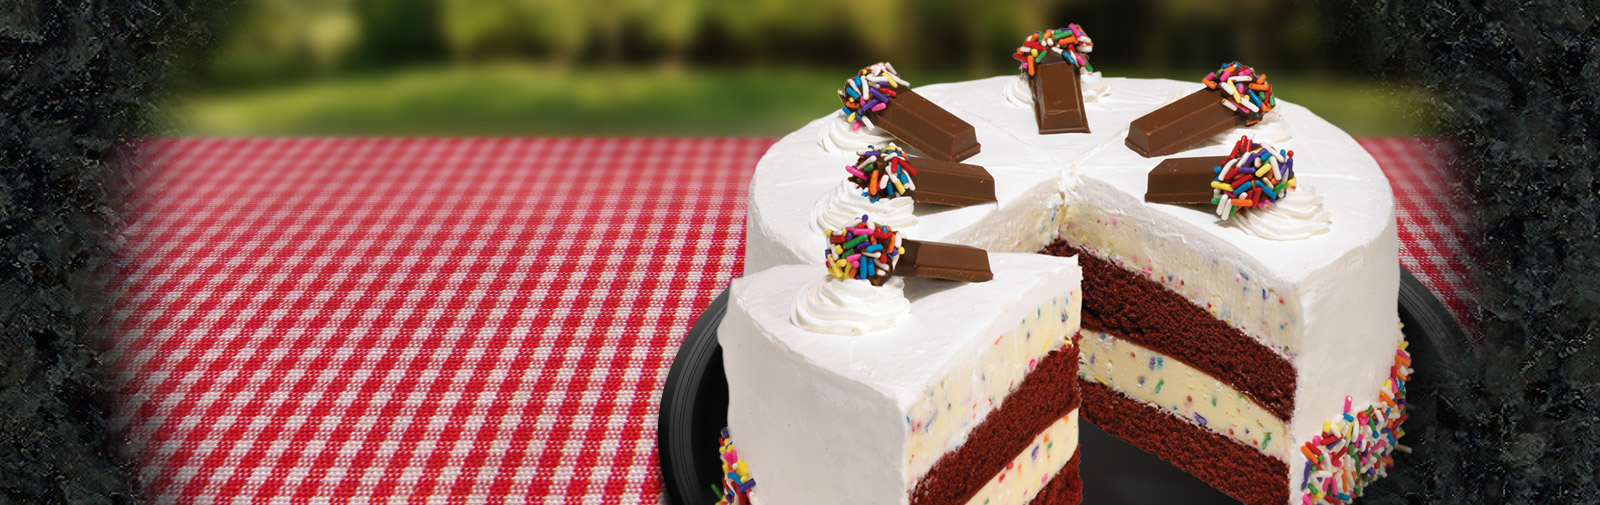 Cream Cake Images - Free Download on Freepik